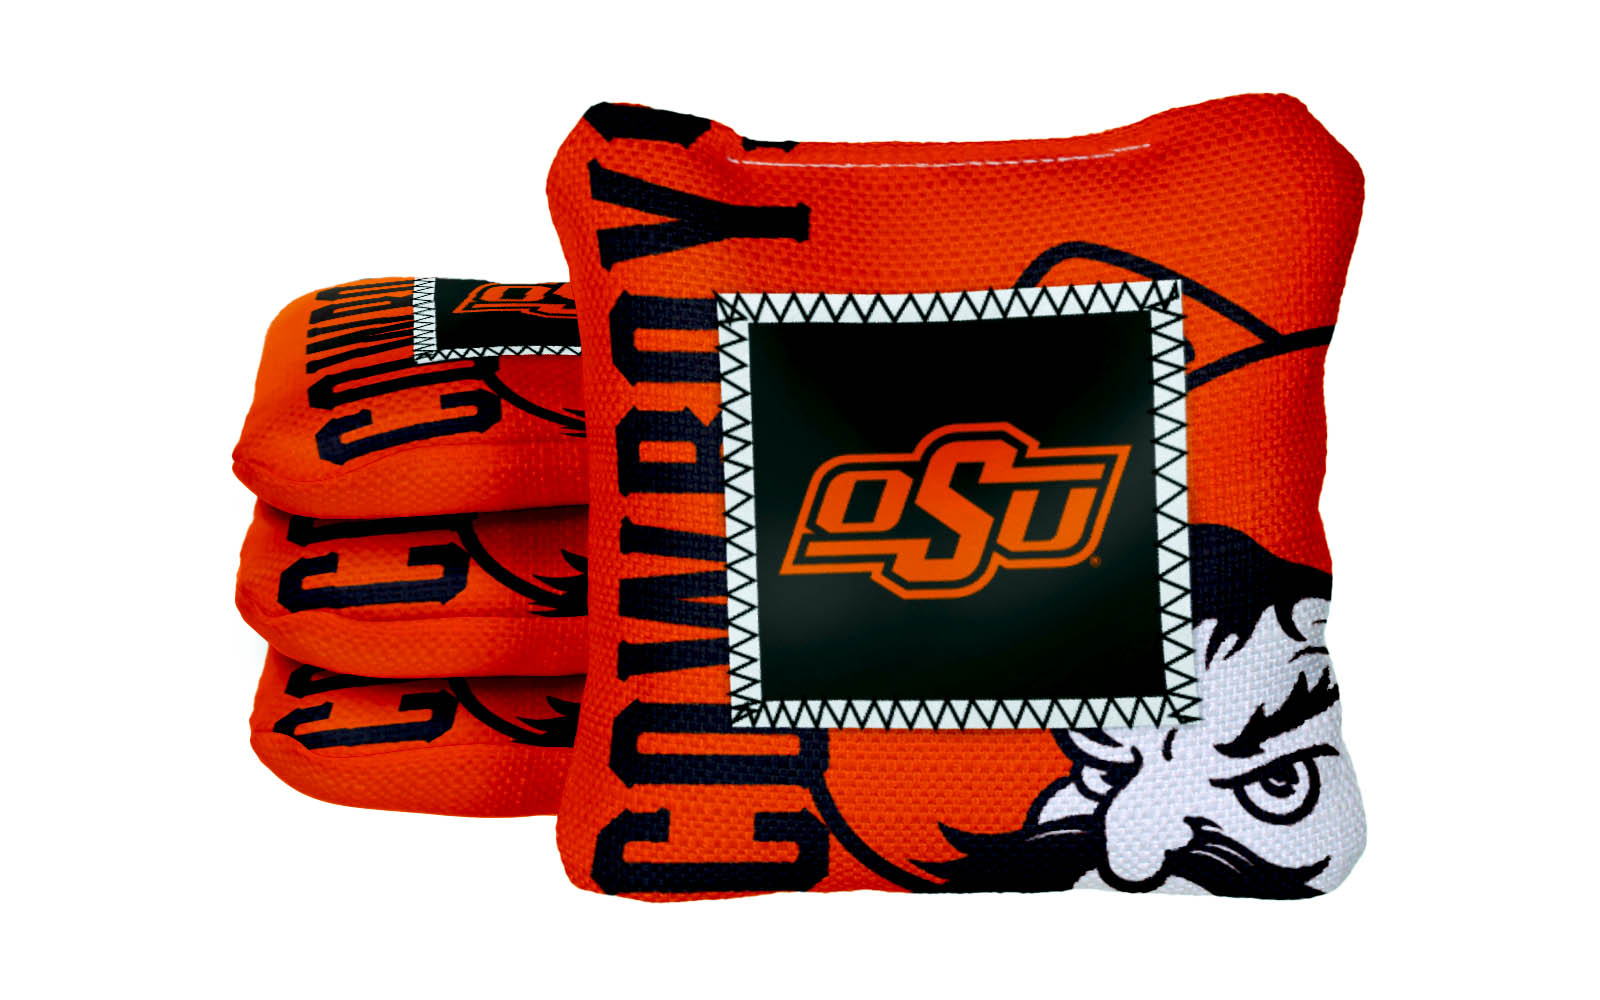 Officially Licensed Collegiate Cornhole Bags - Gamechanger Steady 2.0 - Set of 4 - Oklahoma State University